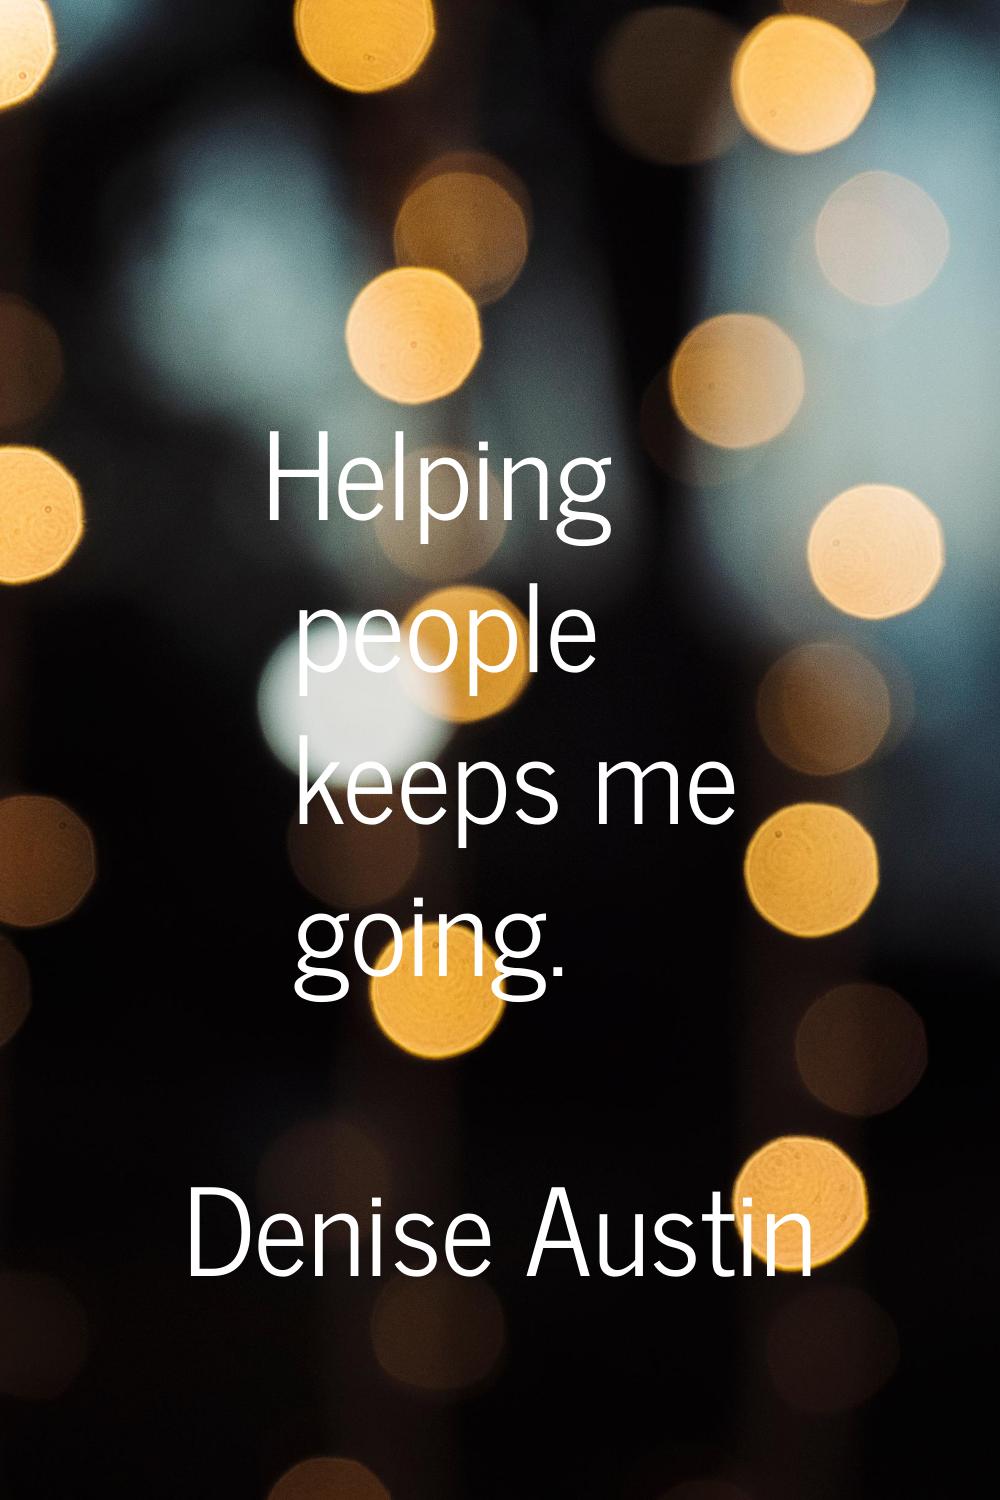 Helping people keeps me going.